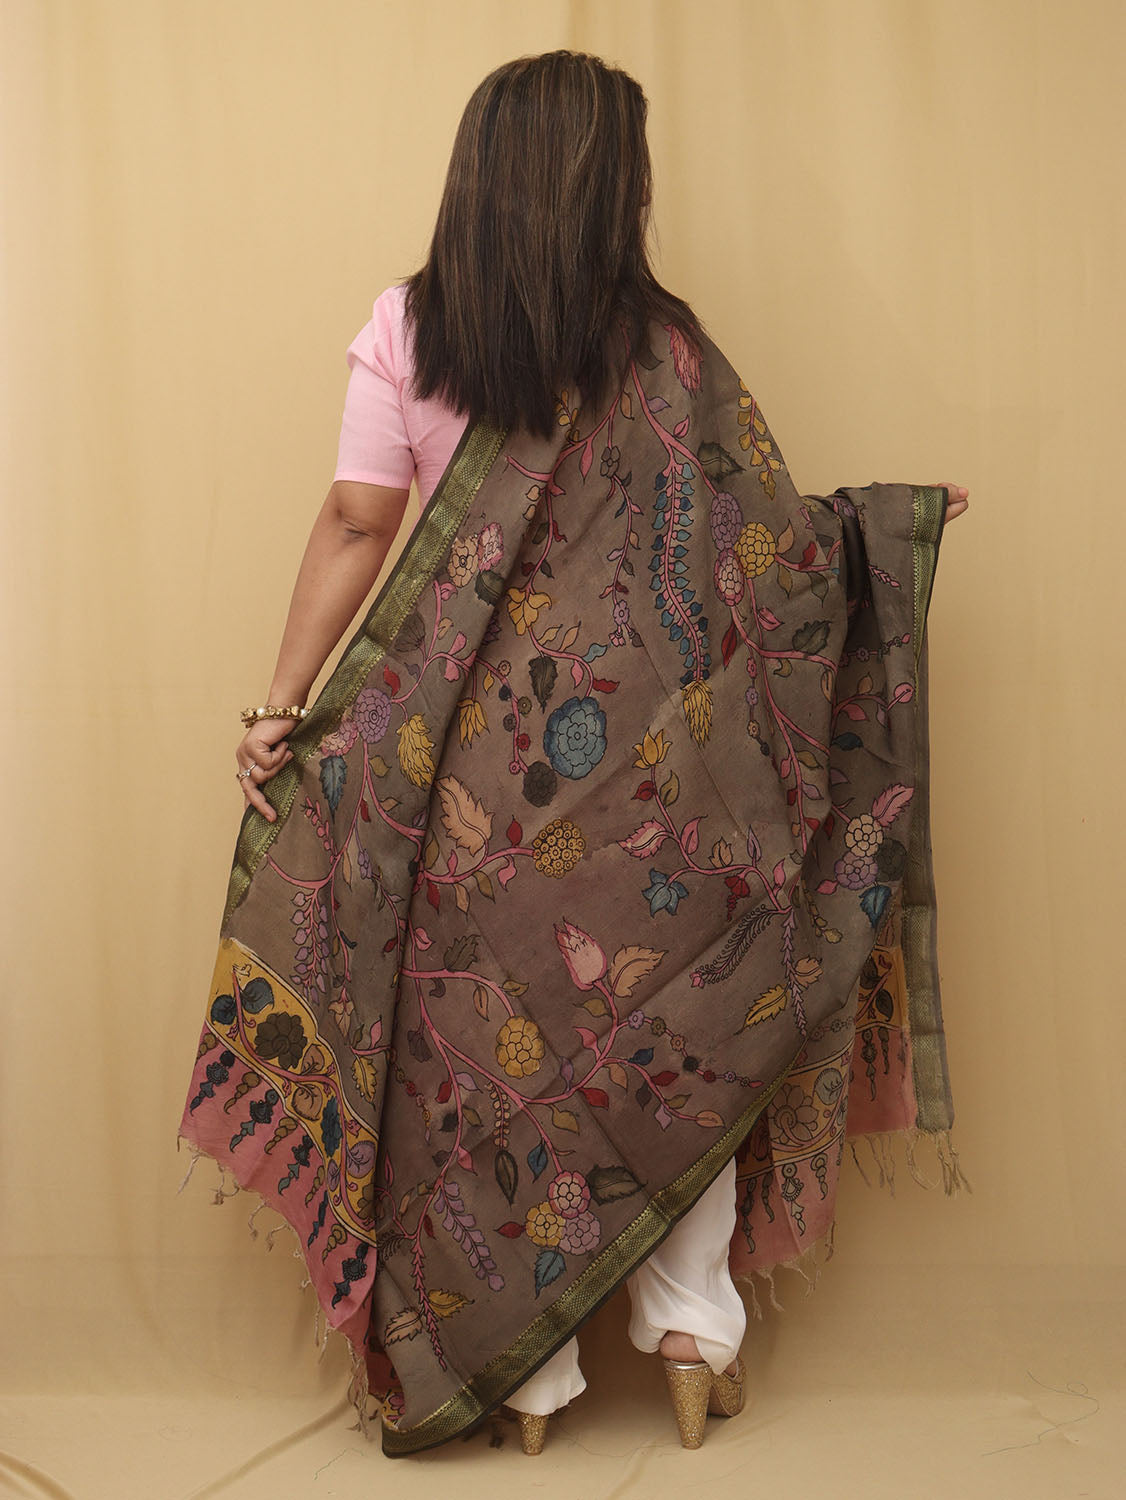 Stylish Multicolor Kalamkari Silk Dupatta for a Chic Look